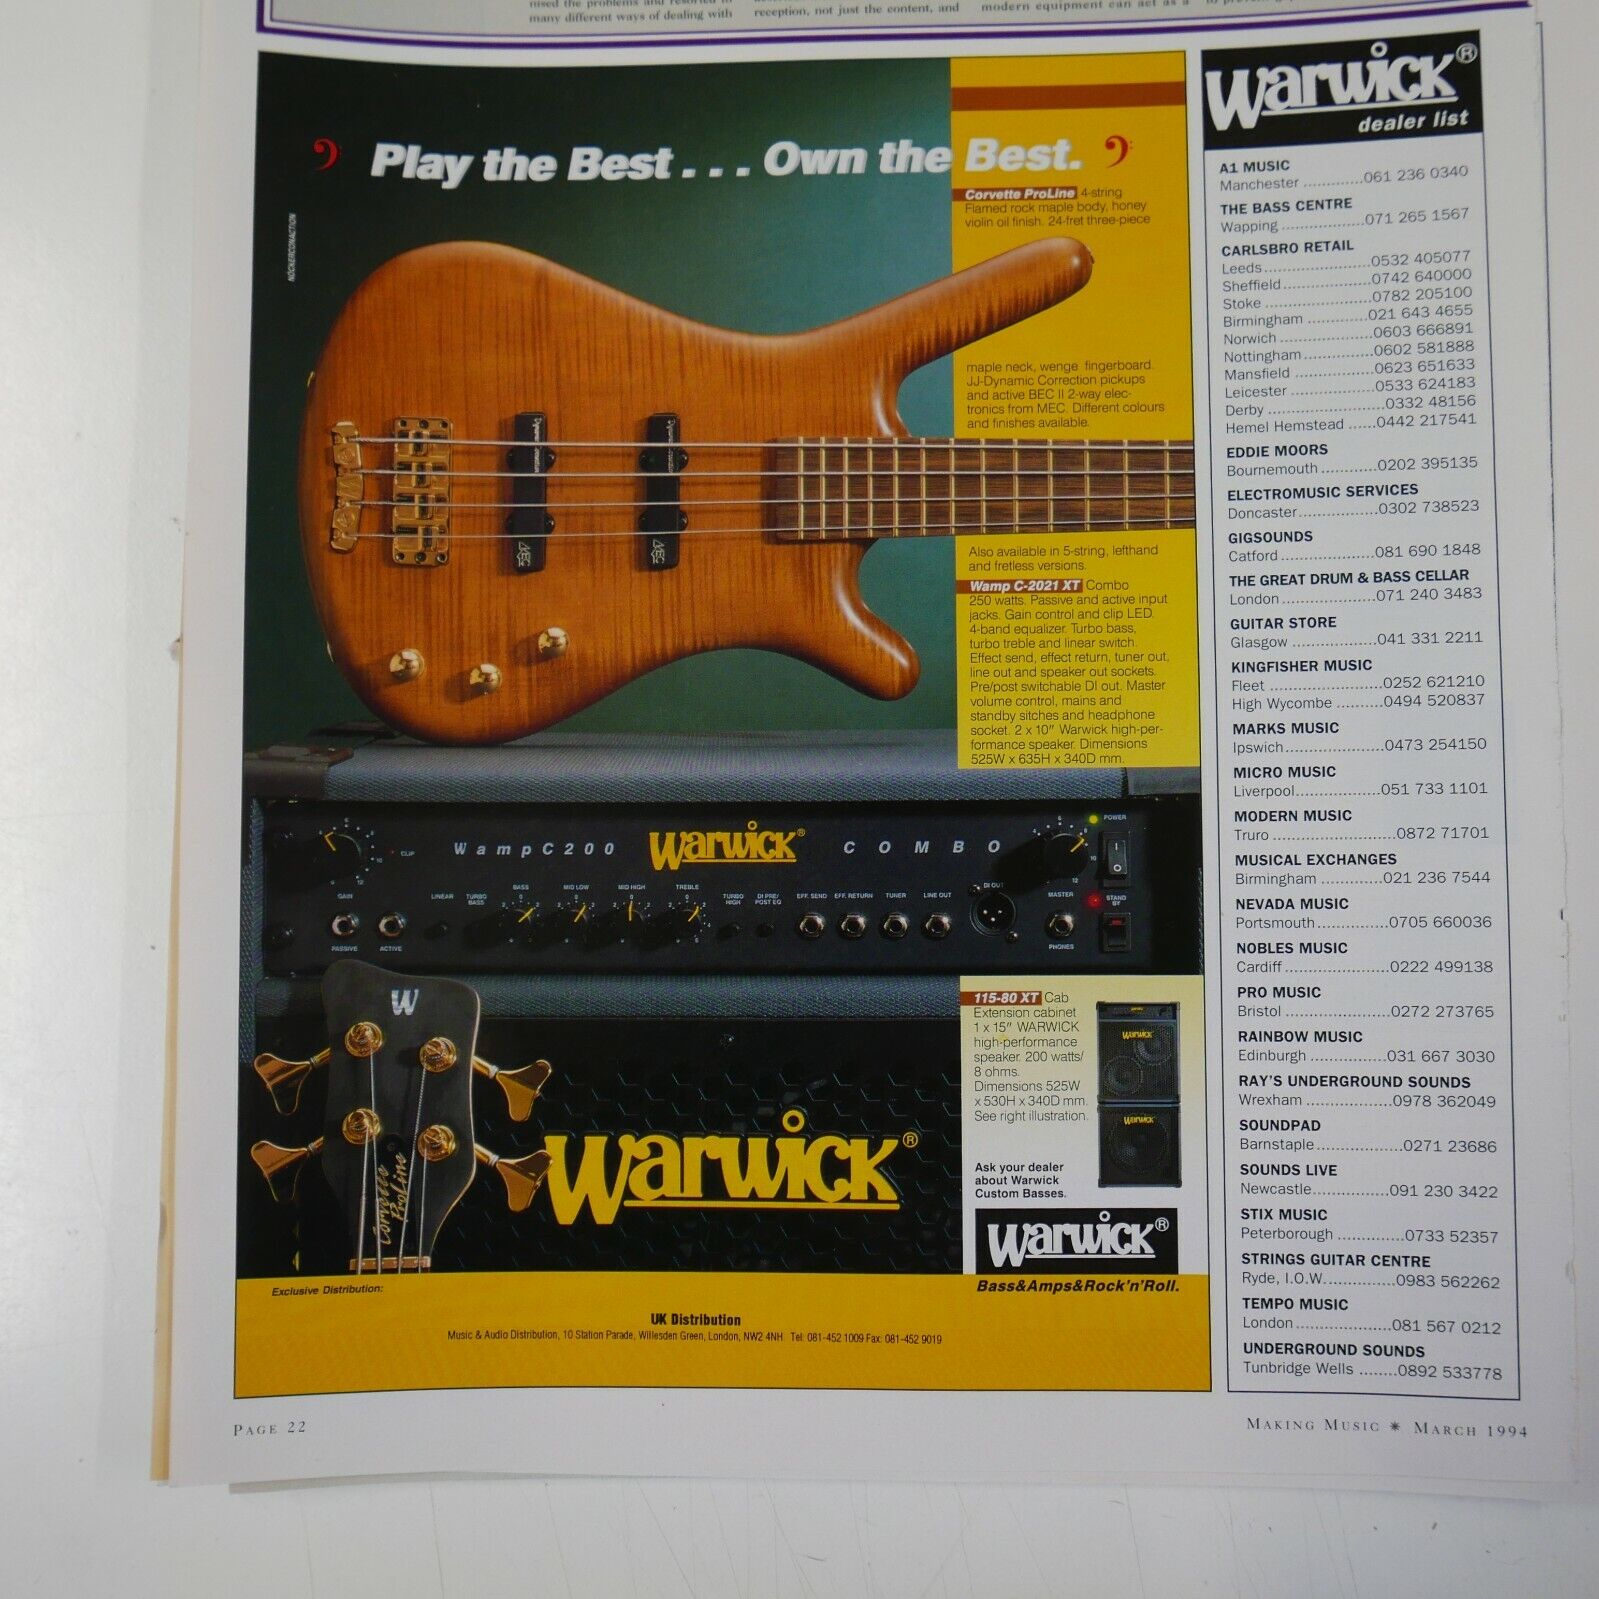 21x30cm magazine cutting 1994 WARWICK CORVETTE / WAMP